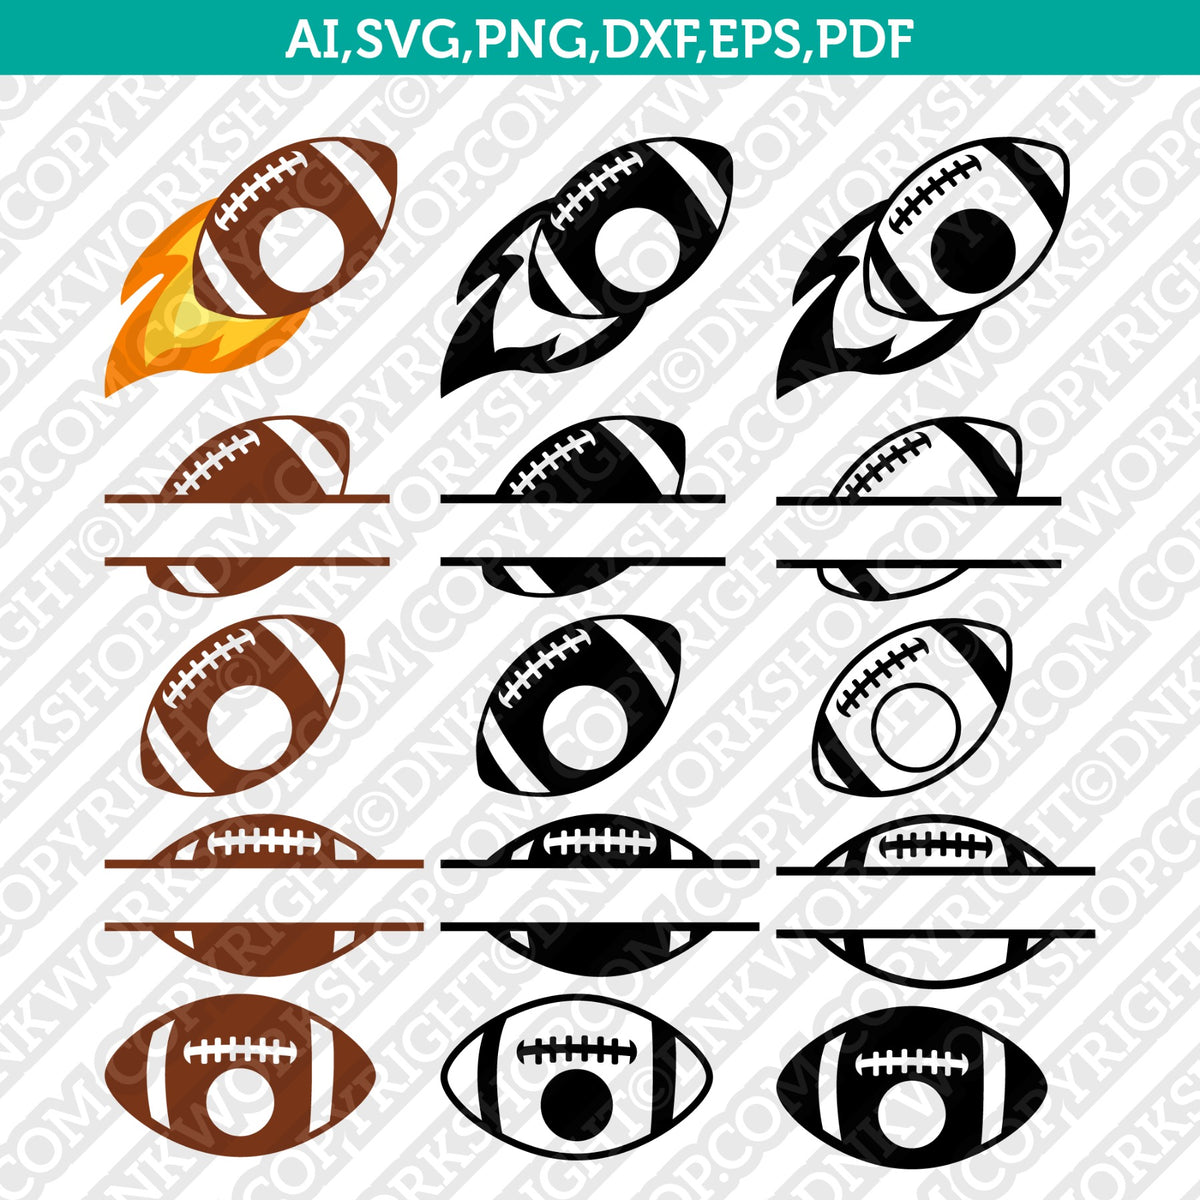 Nikefootball com Vector Logo - Download Free SVG Icon